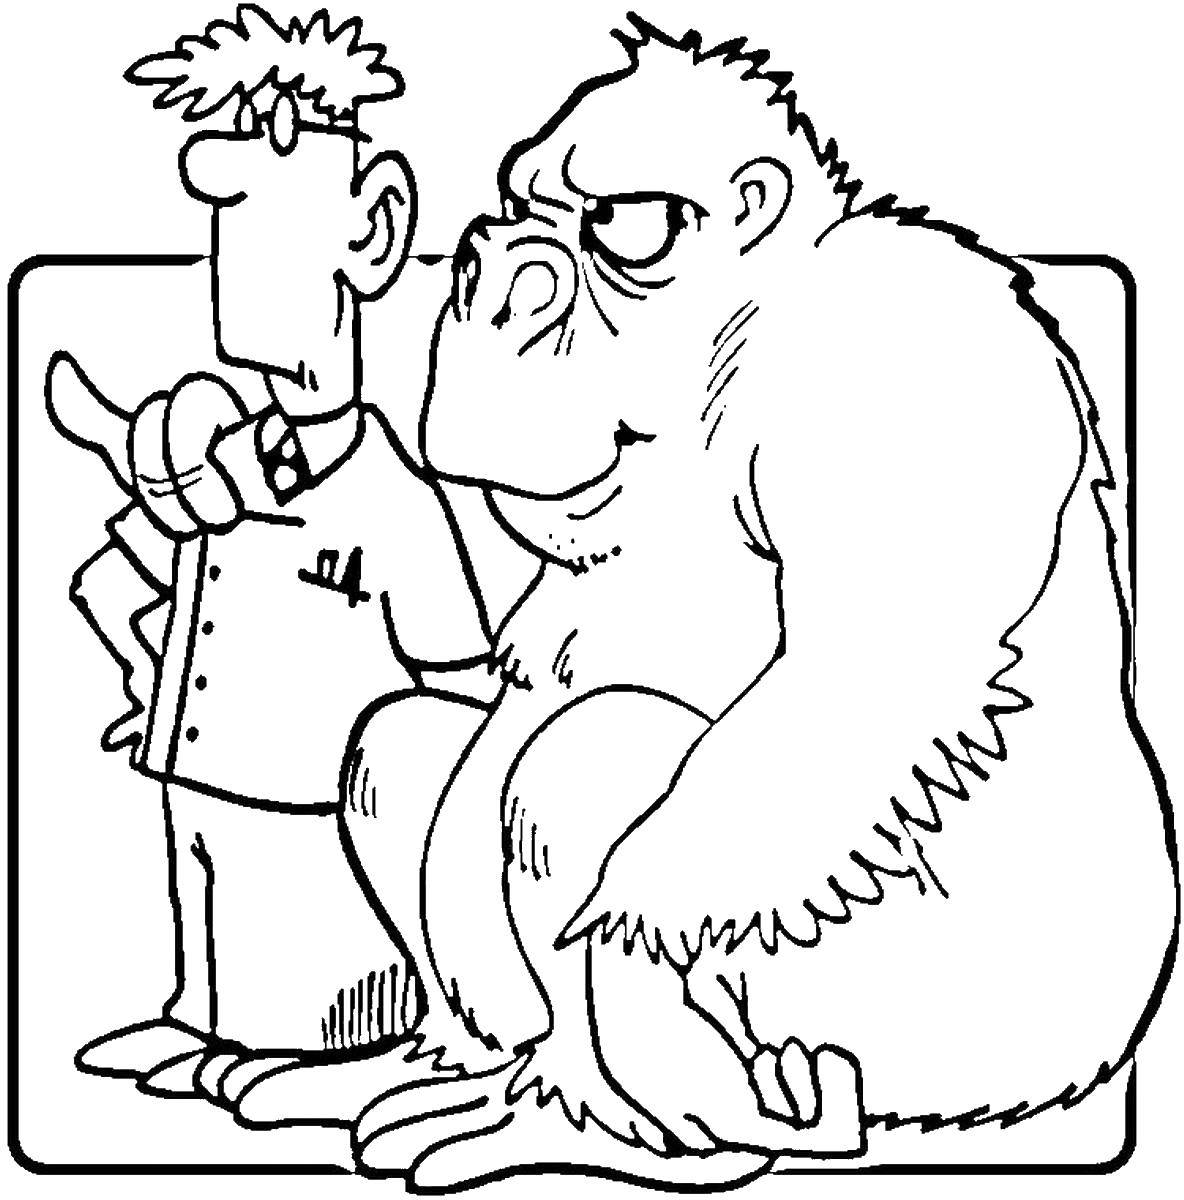 Coloring Gorilla and man. Category Animals. Tags:  gorilla, man.